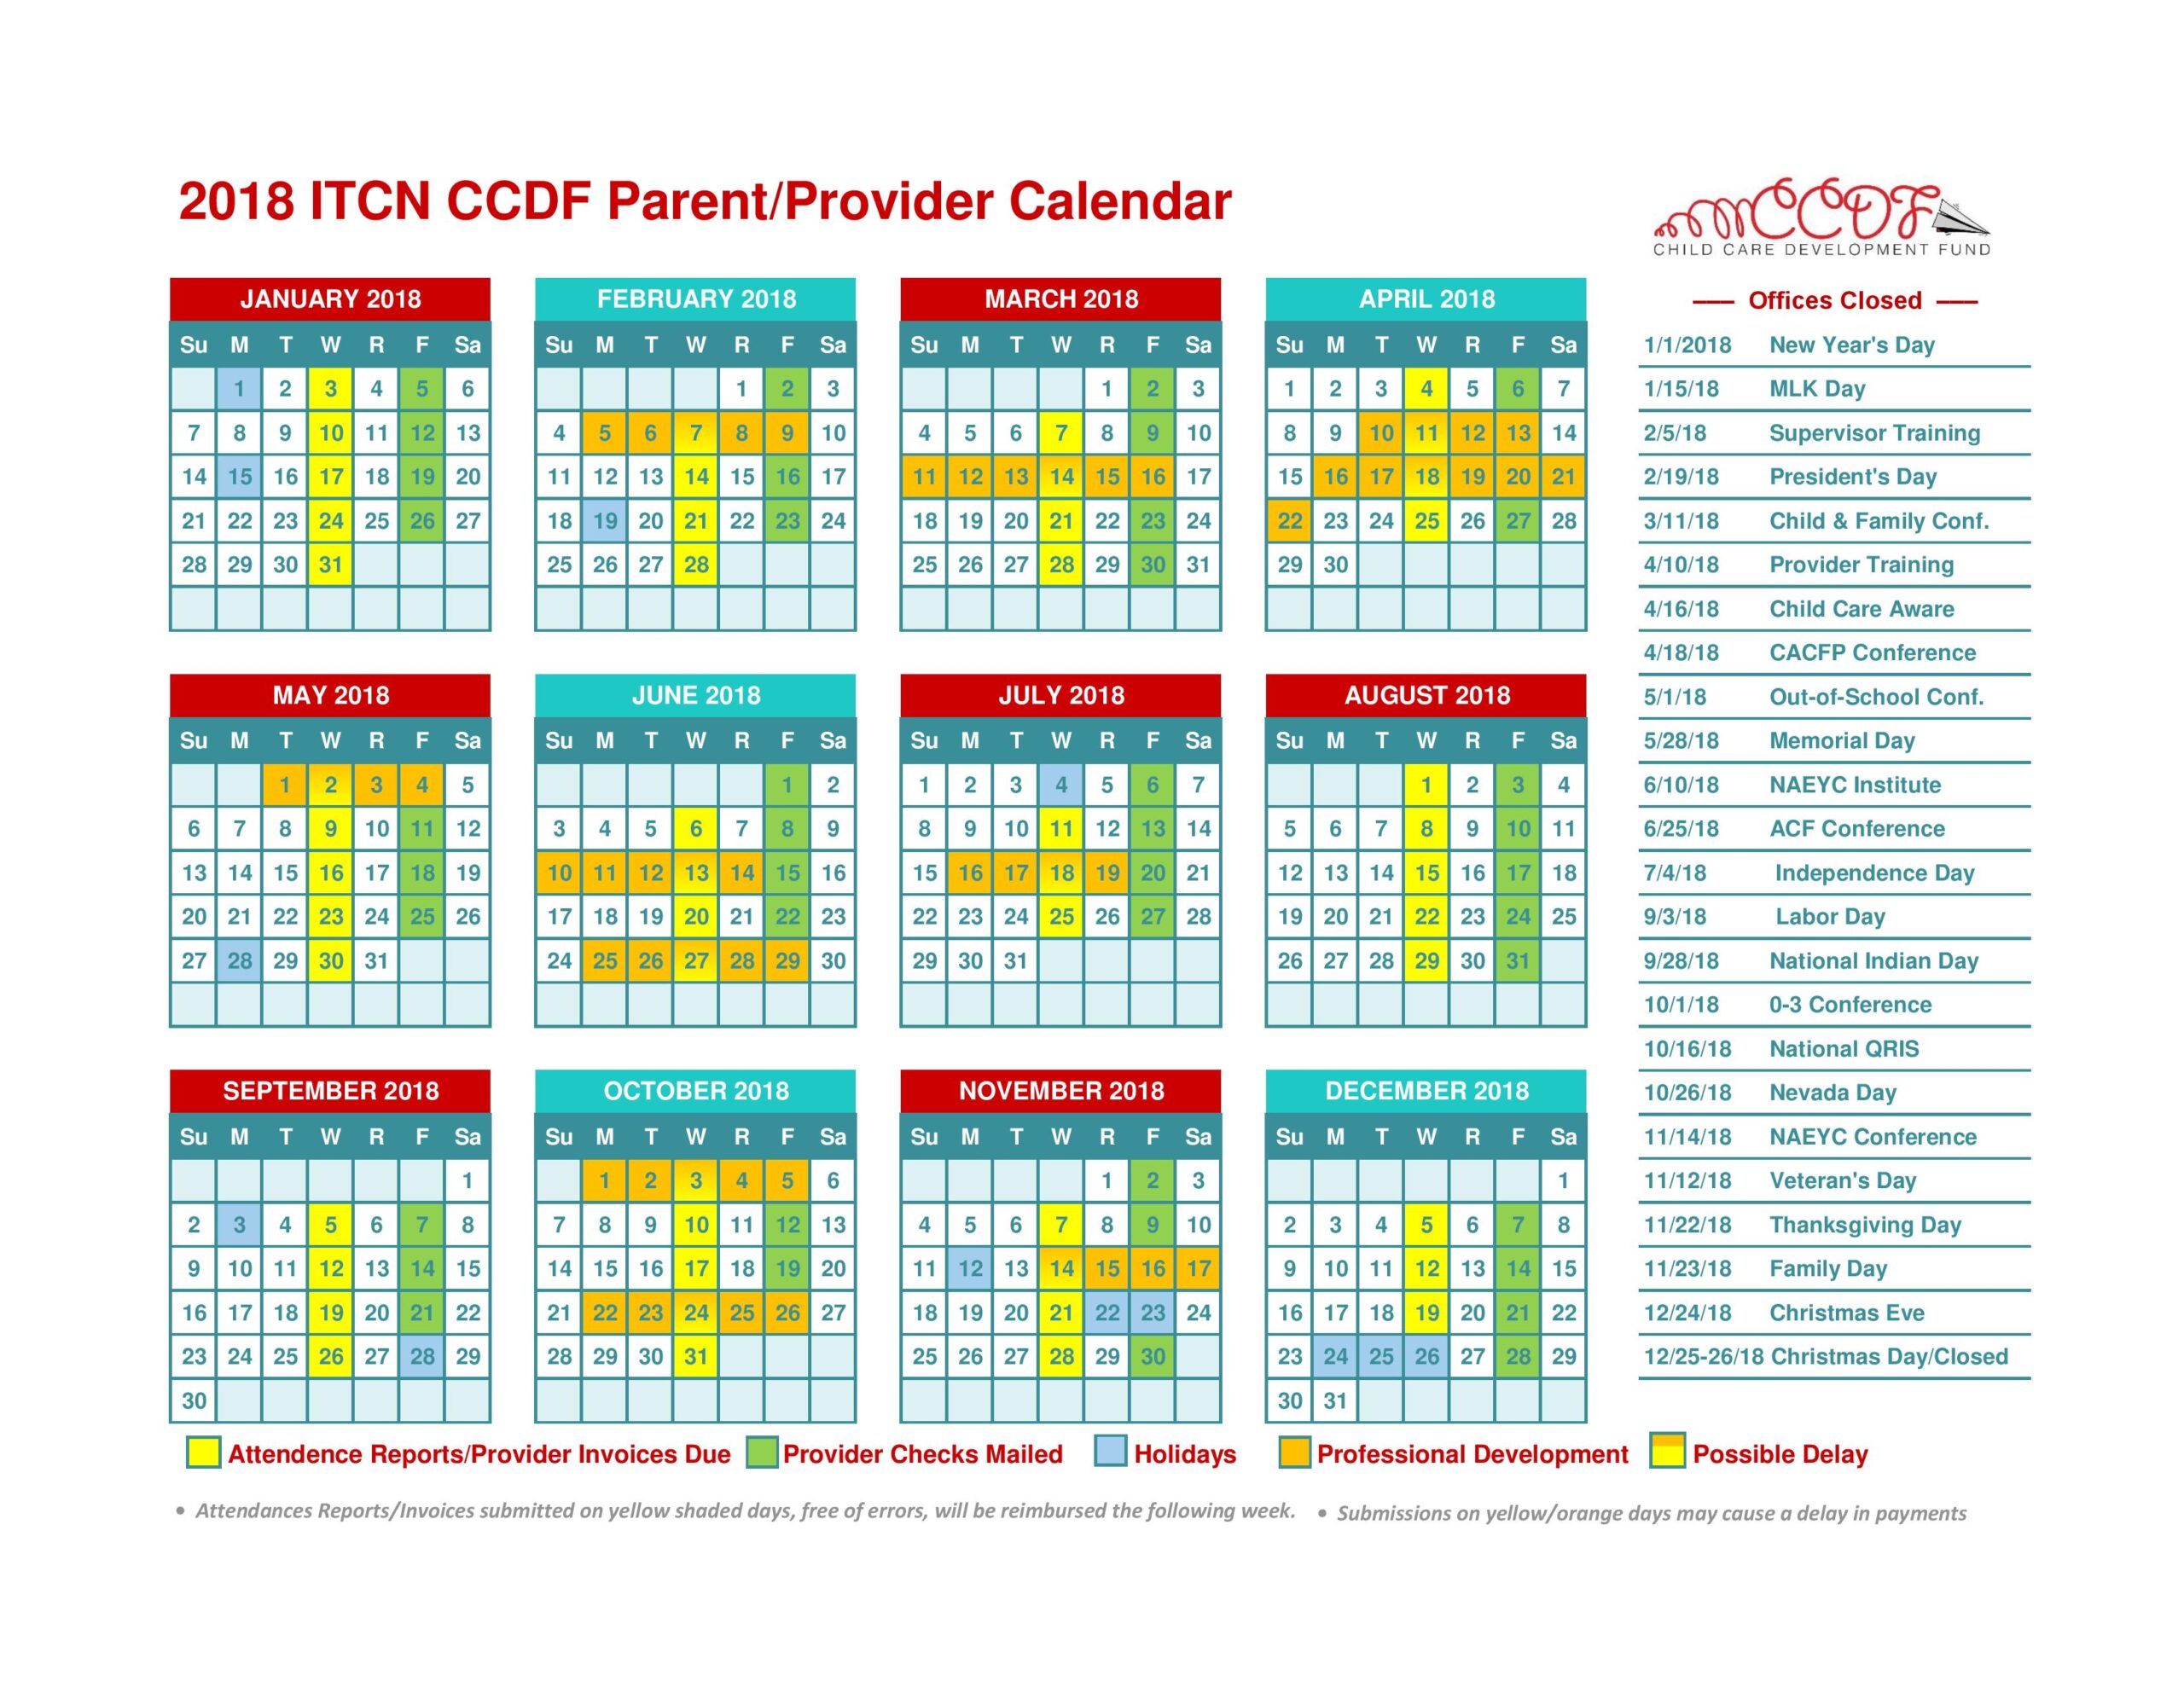 ITCN CCDF 2018 Parent Provider Calendar